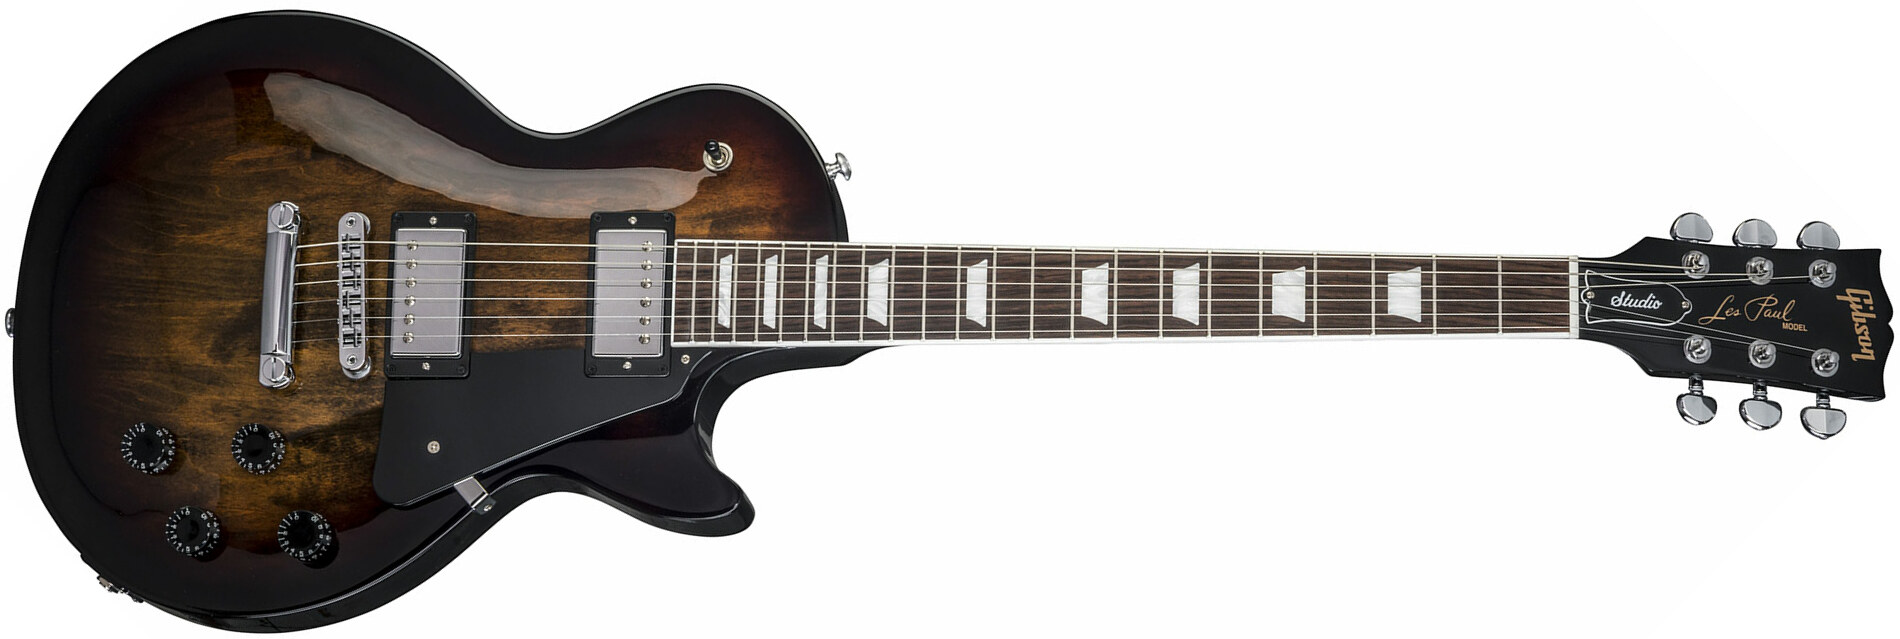 Gibson Les Paul Studio 2018 - Smokehouse Burst - Single cut electric guitar - Main picture